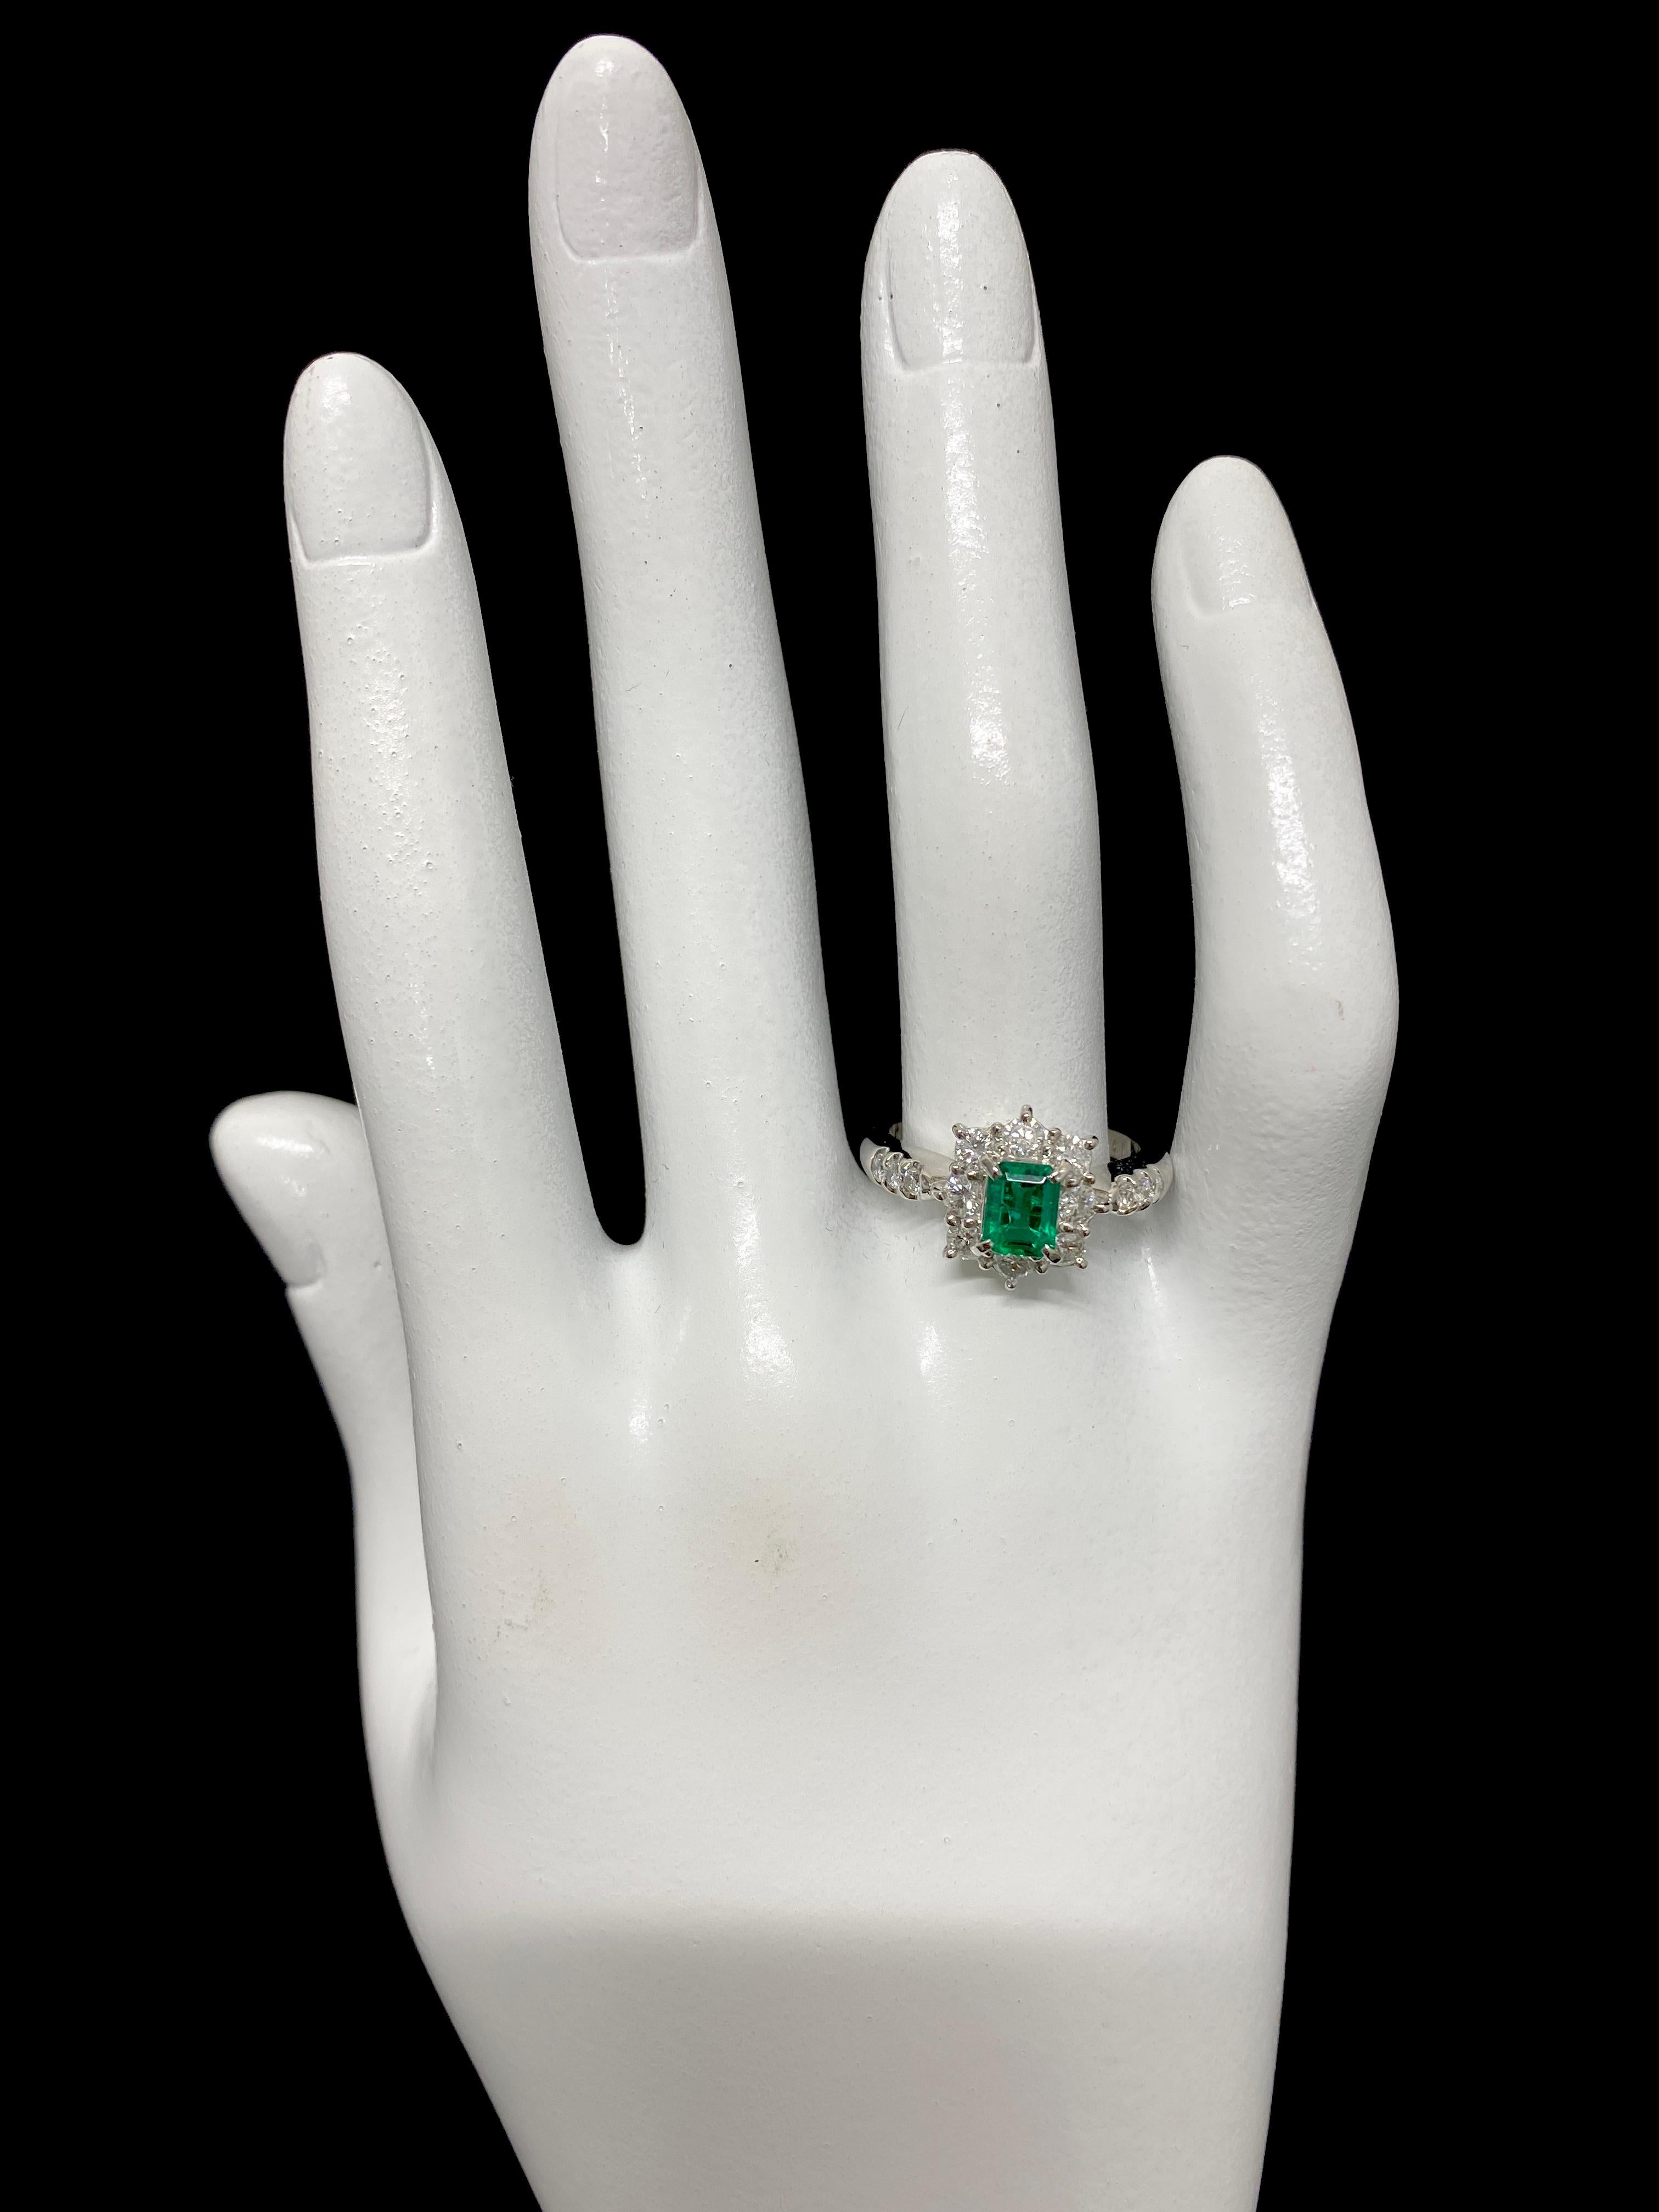 0.61 Carat Natural Emerald and Diamond Ring Set in Platinum 1